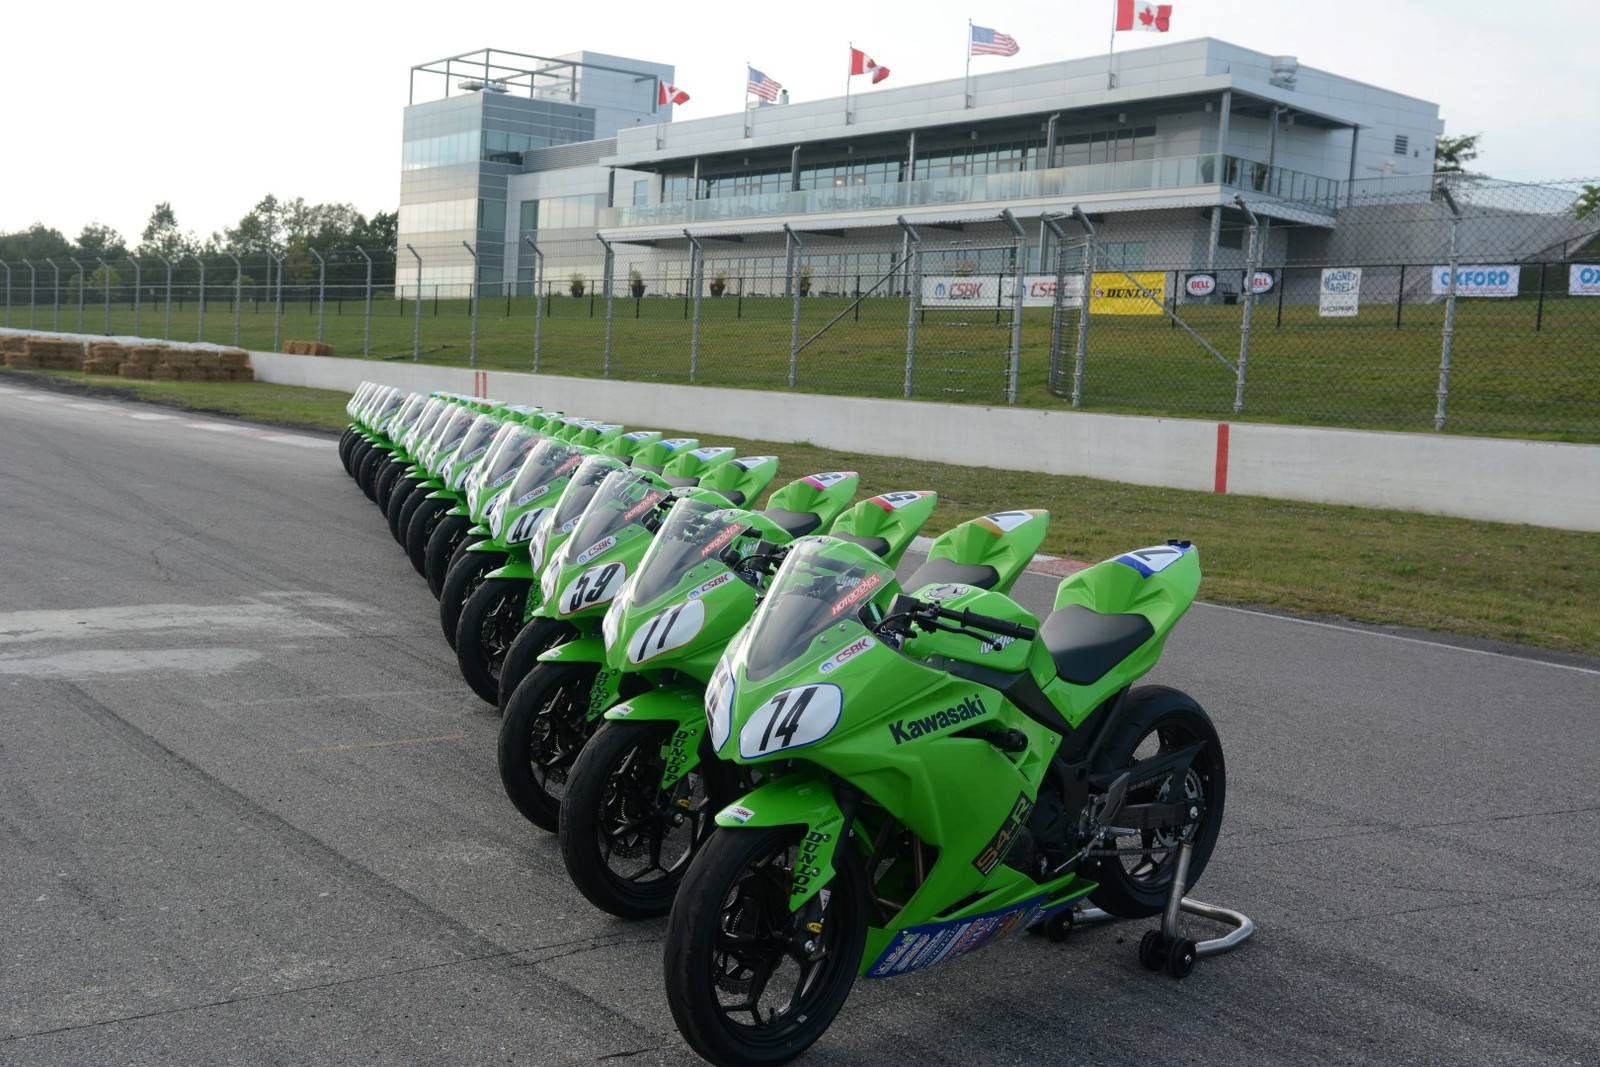 Kawasaki Ninja 300 Spec Series Will Be Of Canadian Superbike Championship - Roadracing Magazine | Motorcycle Riding, Racing & Tech News